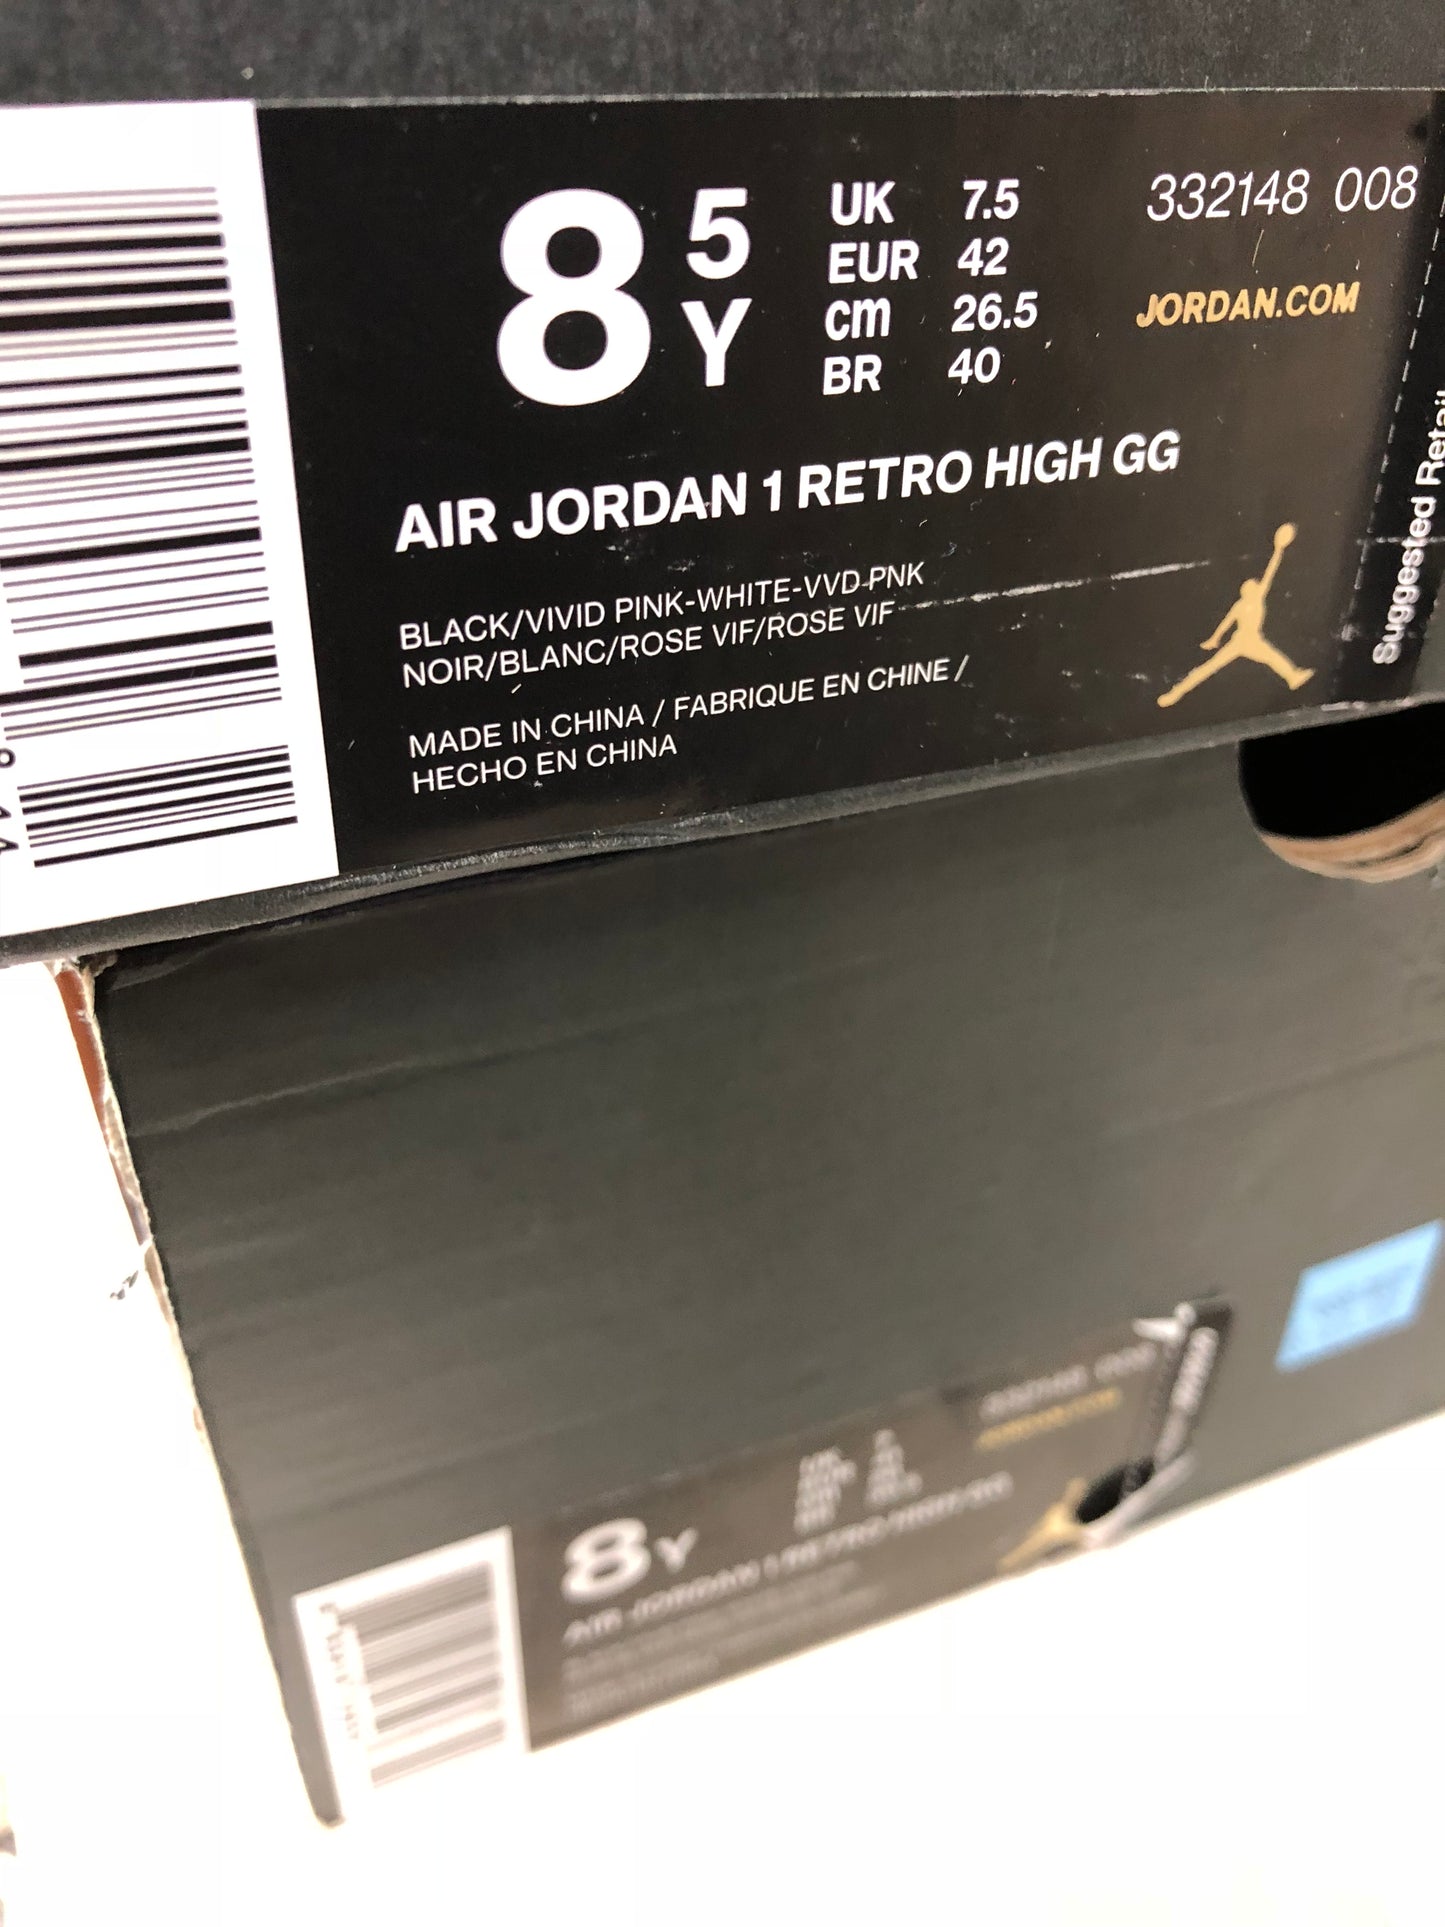 DS Nike Air Jordan 1 Retro High GG Size 8Y/8.5Y Black/Vivid Pink 332148 008